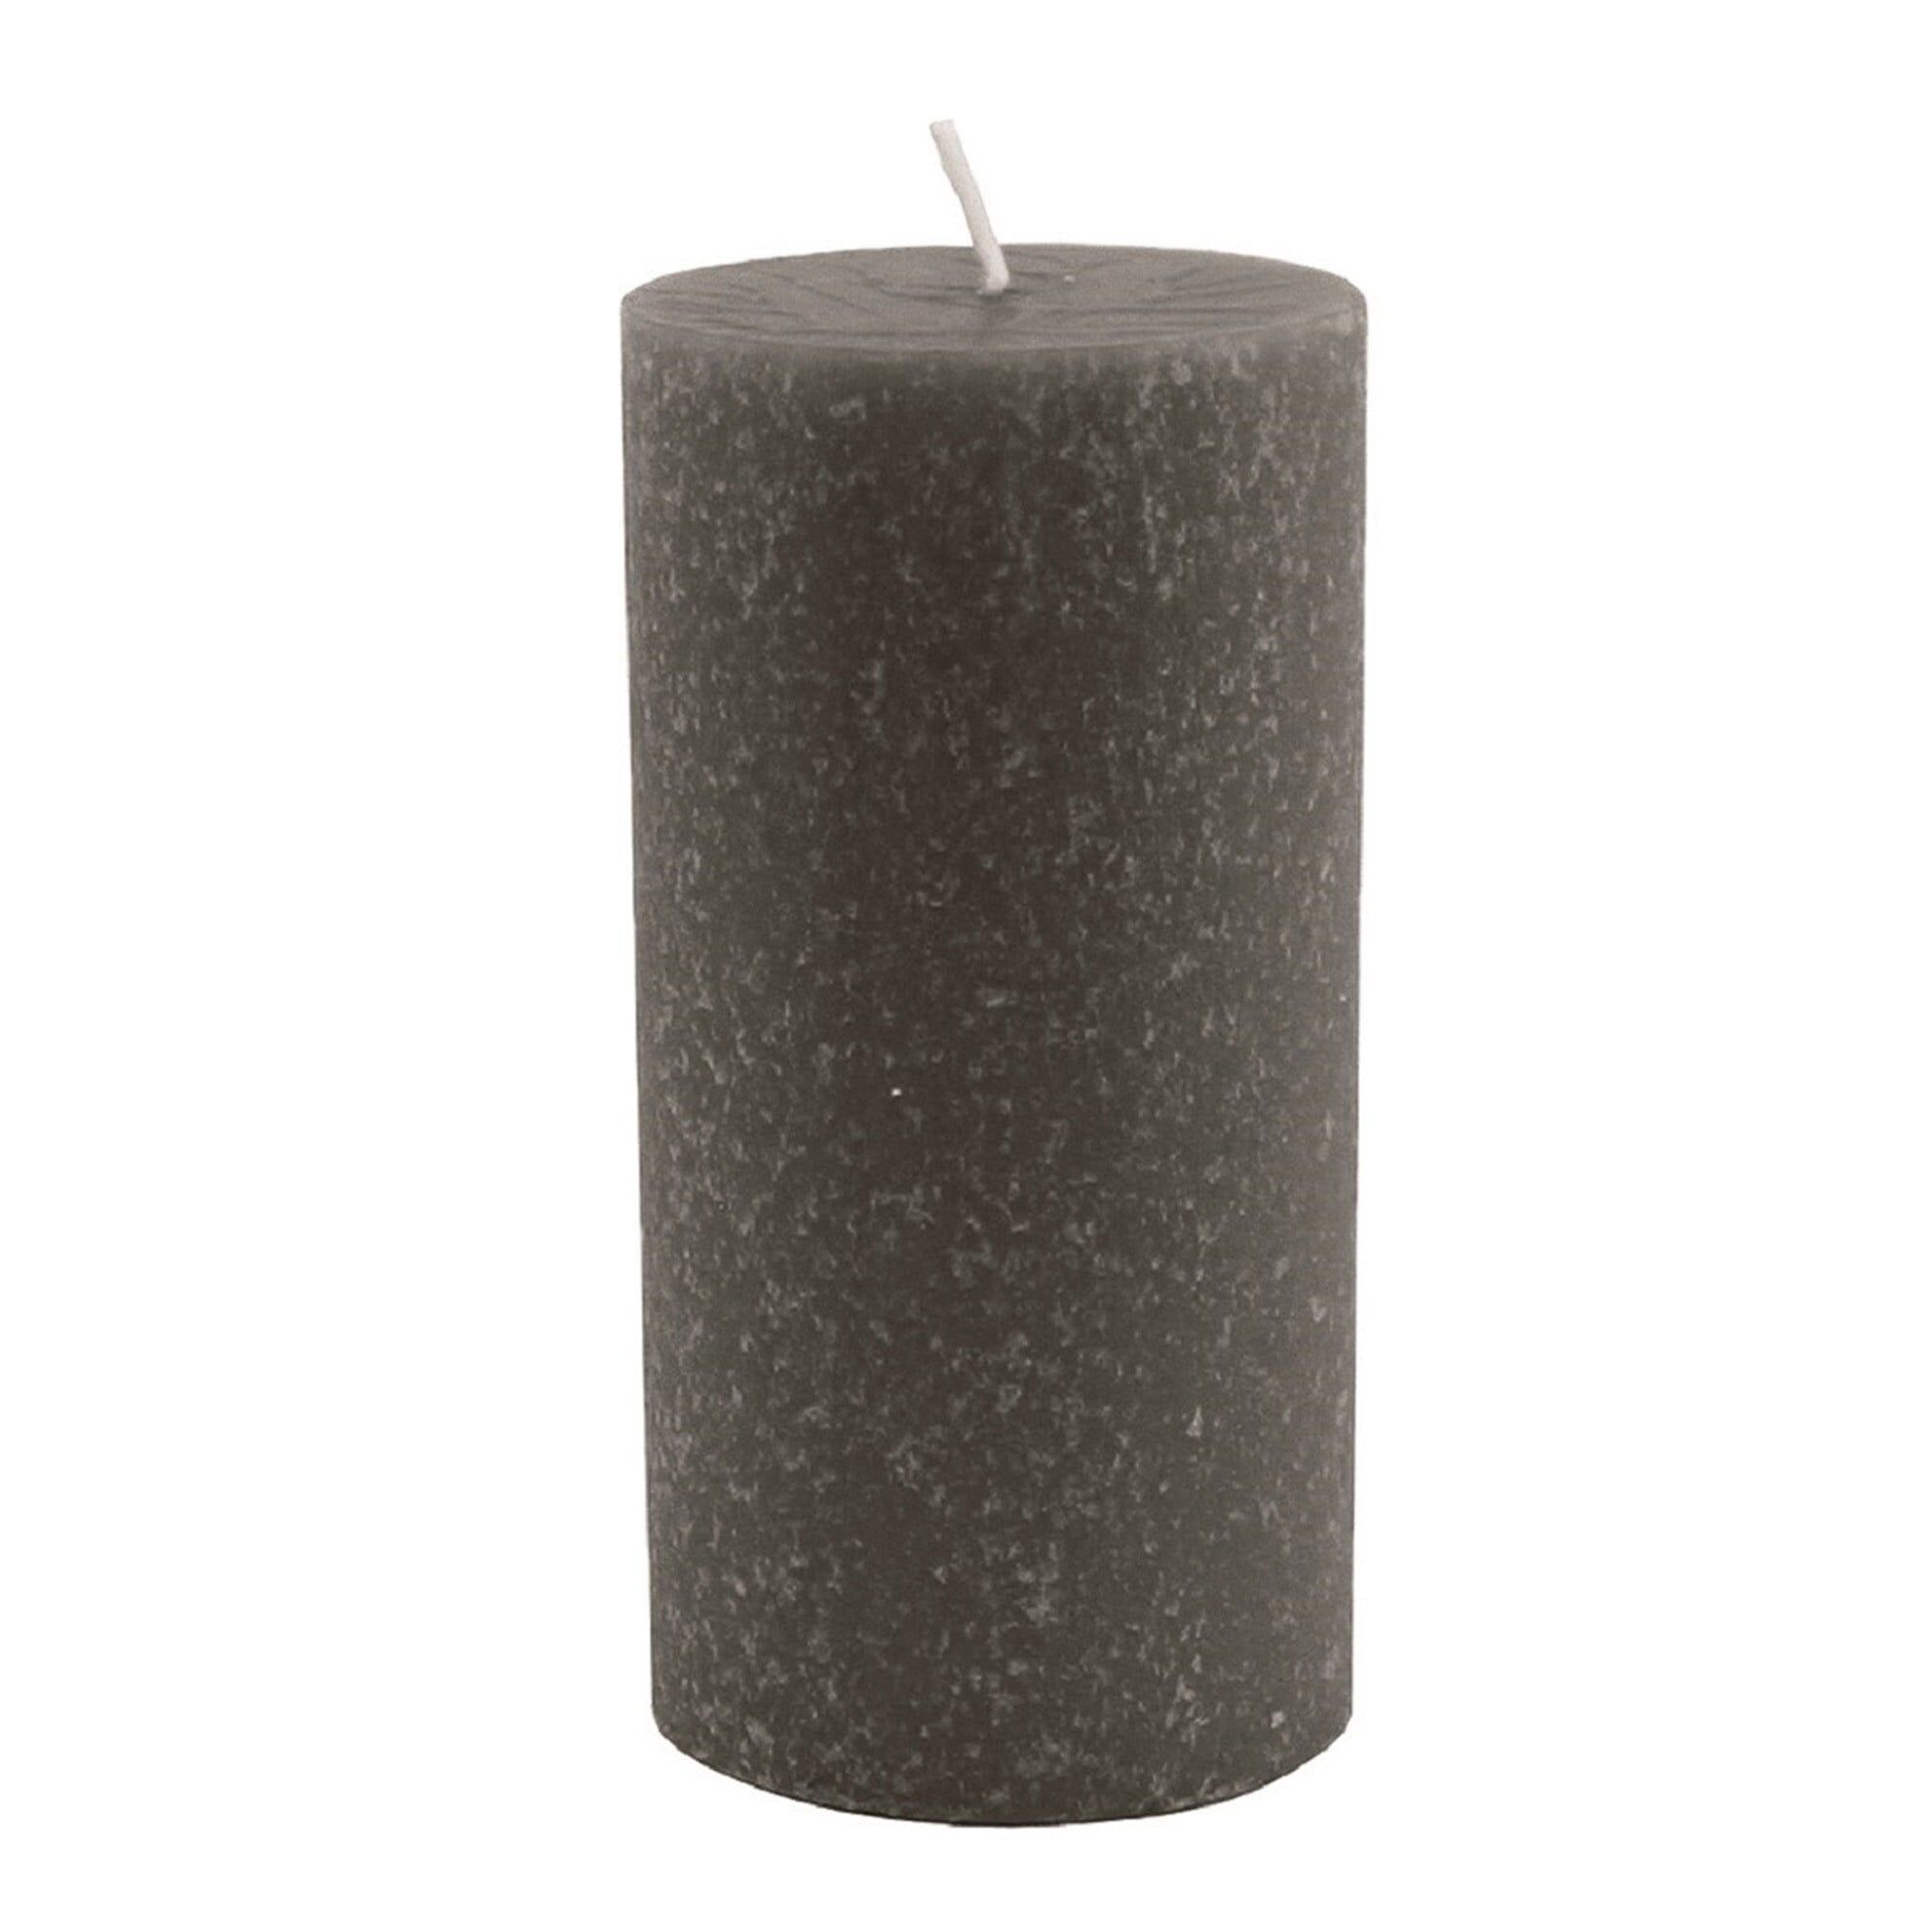 Beeswax Stone Pillar Candle 3" x 6" - Rustic Elegance